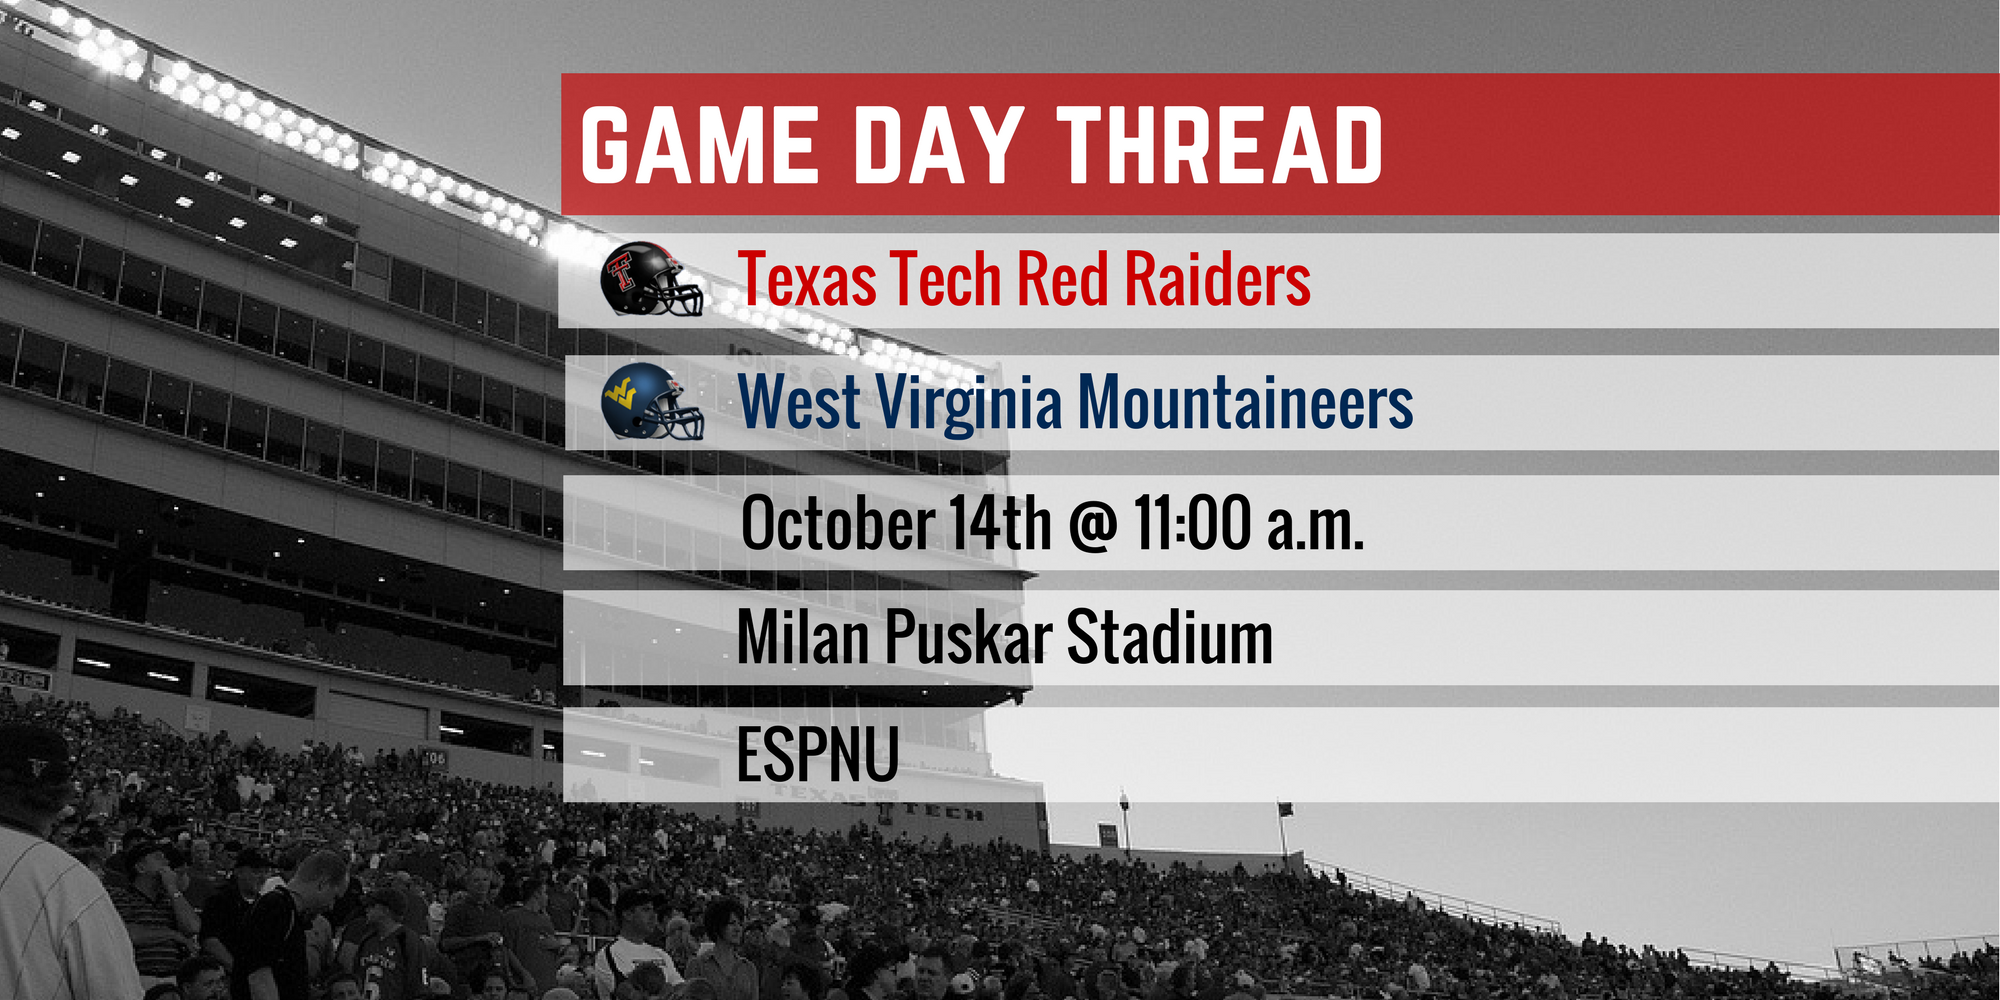 Game Day Thread I: Texas Tech vs. West Virginia